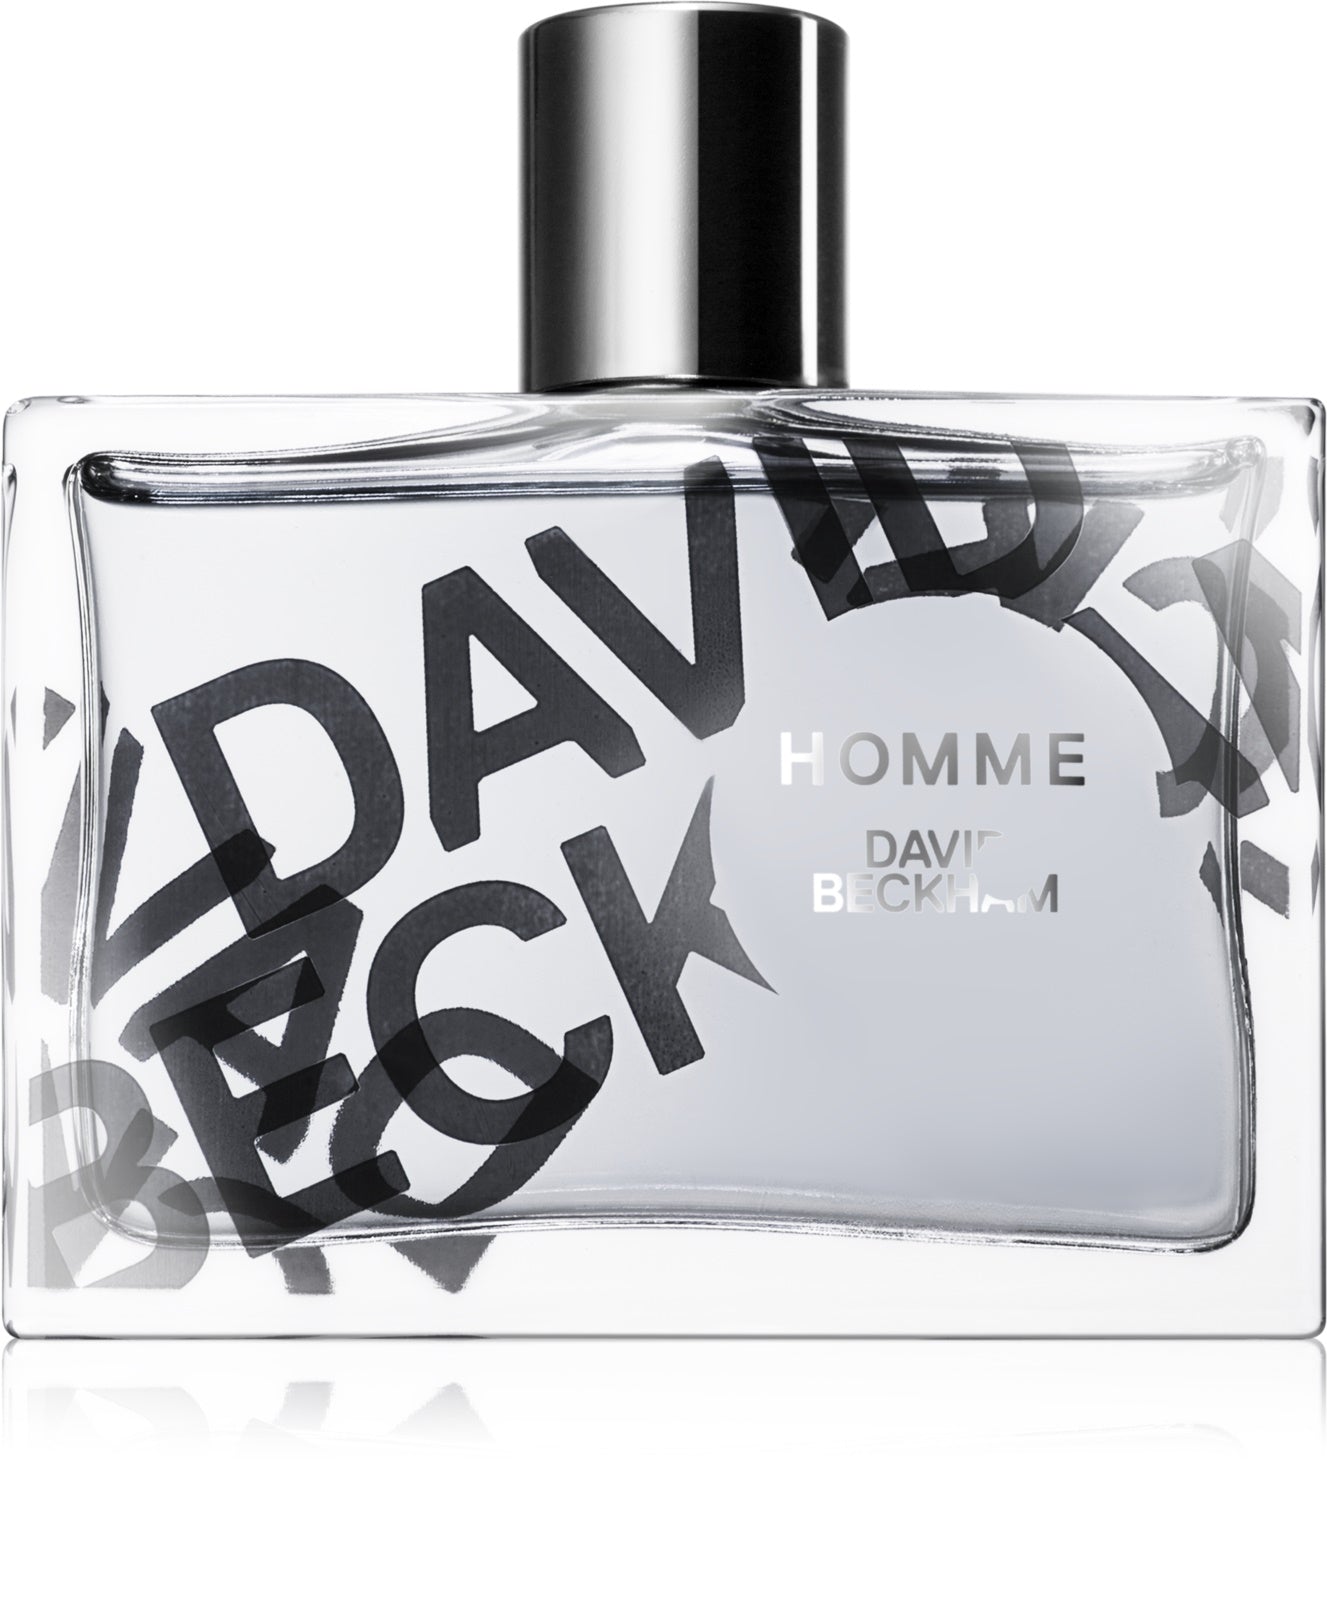 David Beckham Homme EDT - Perfume Planet 